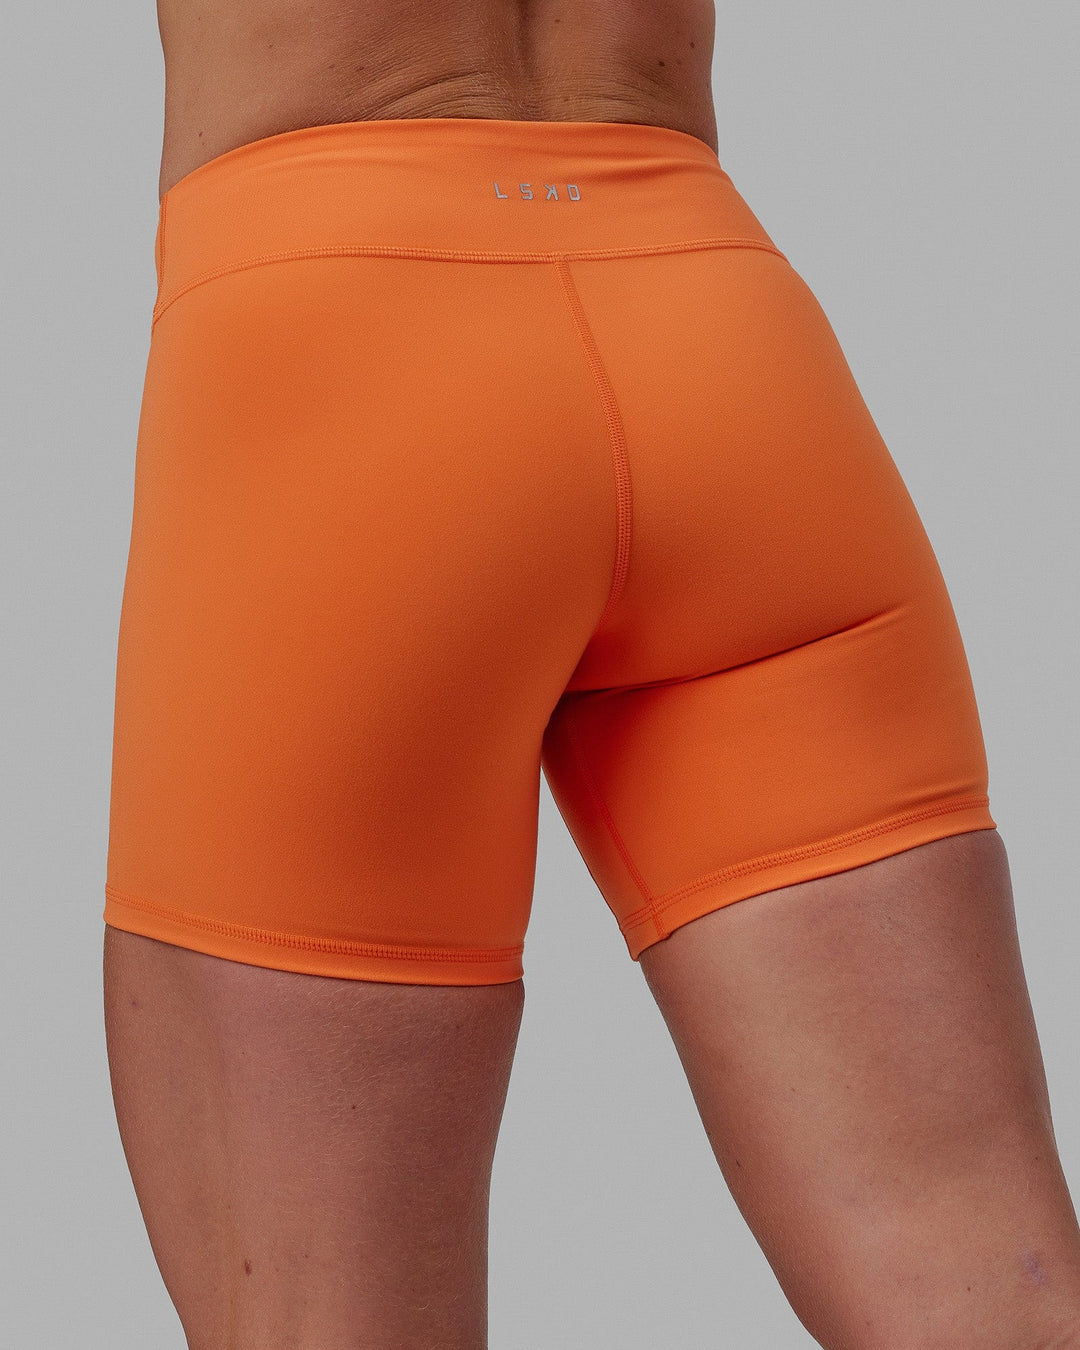 RXD Mid-Length Shorts - Melon